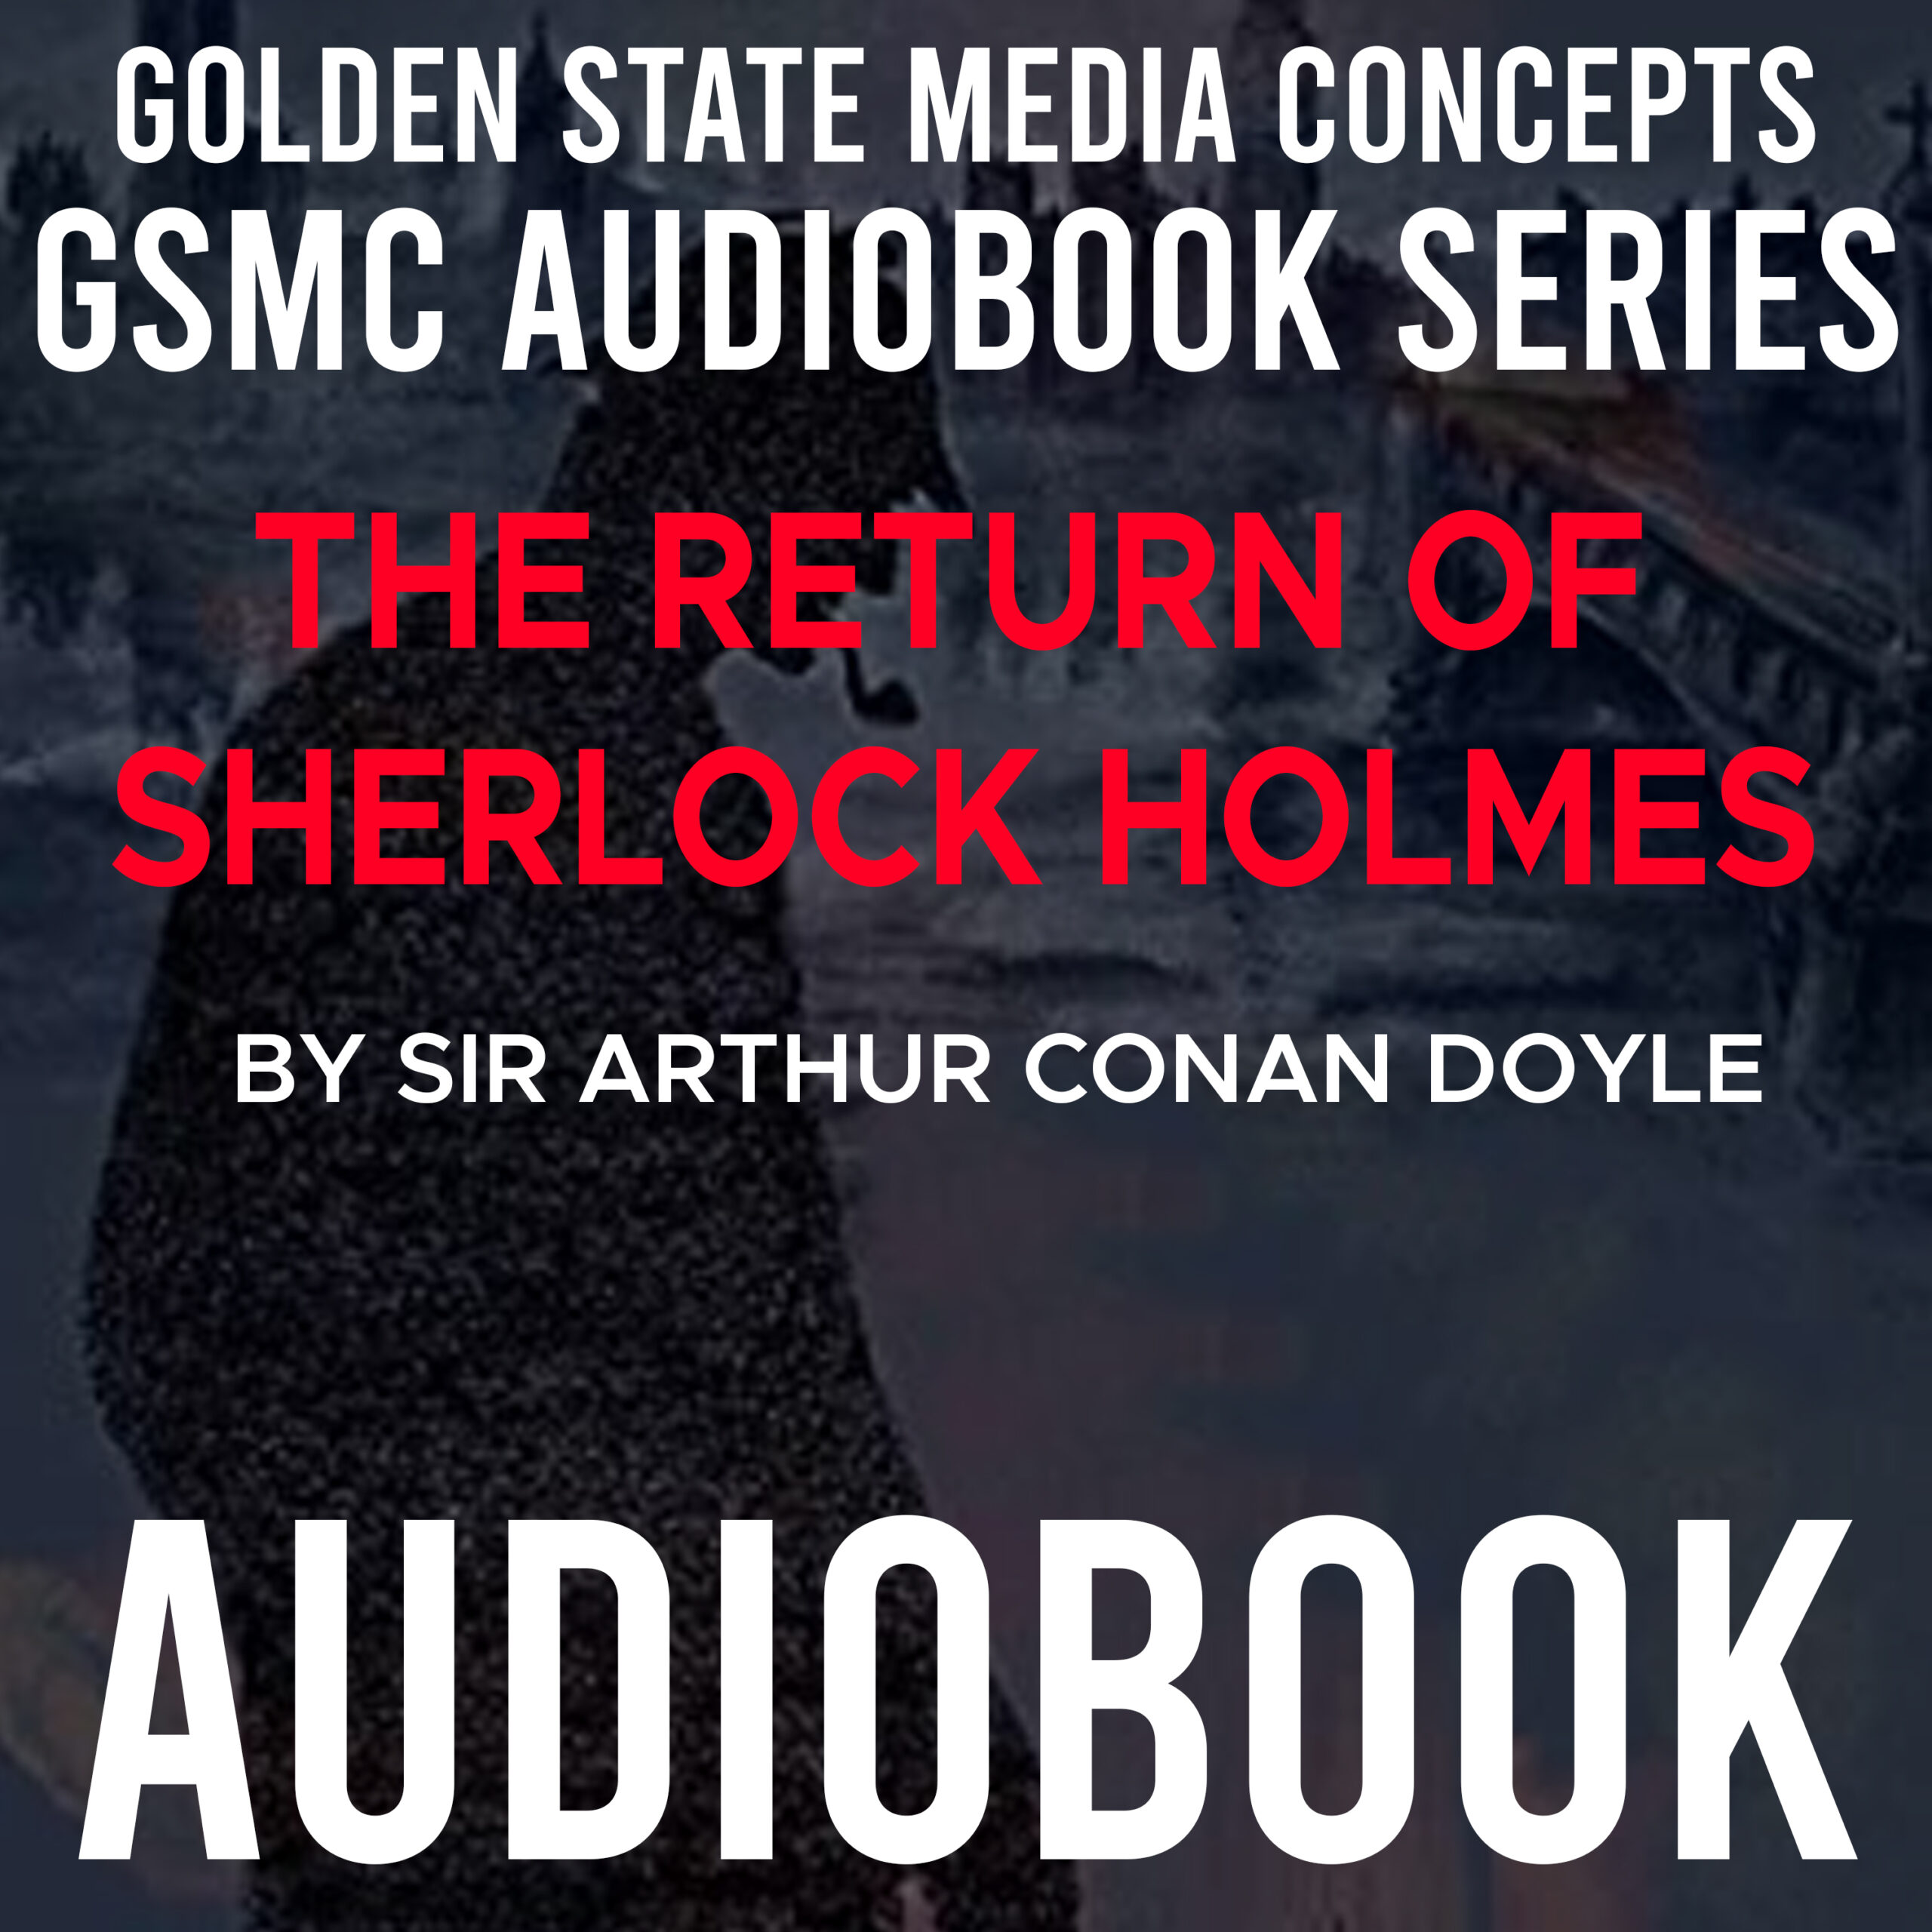 GSMC Audiobook Series: The Return of Sherlock Holmes